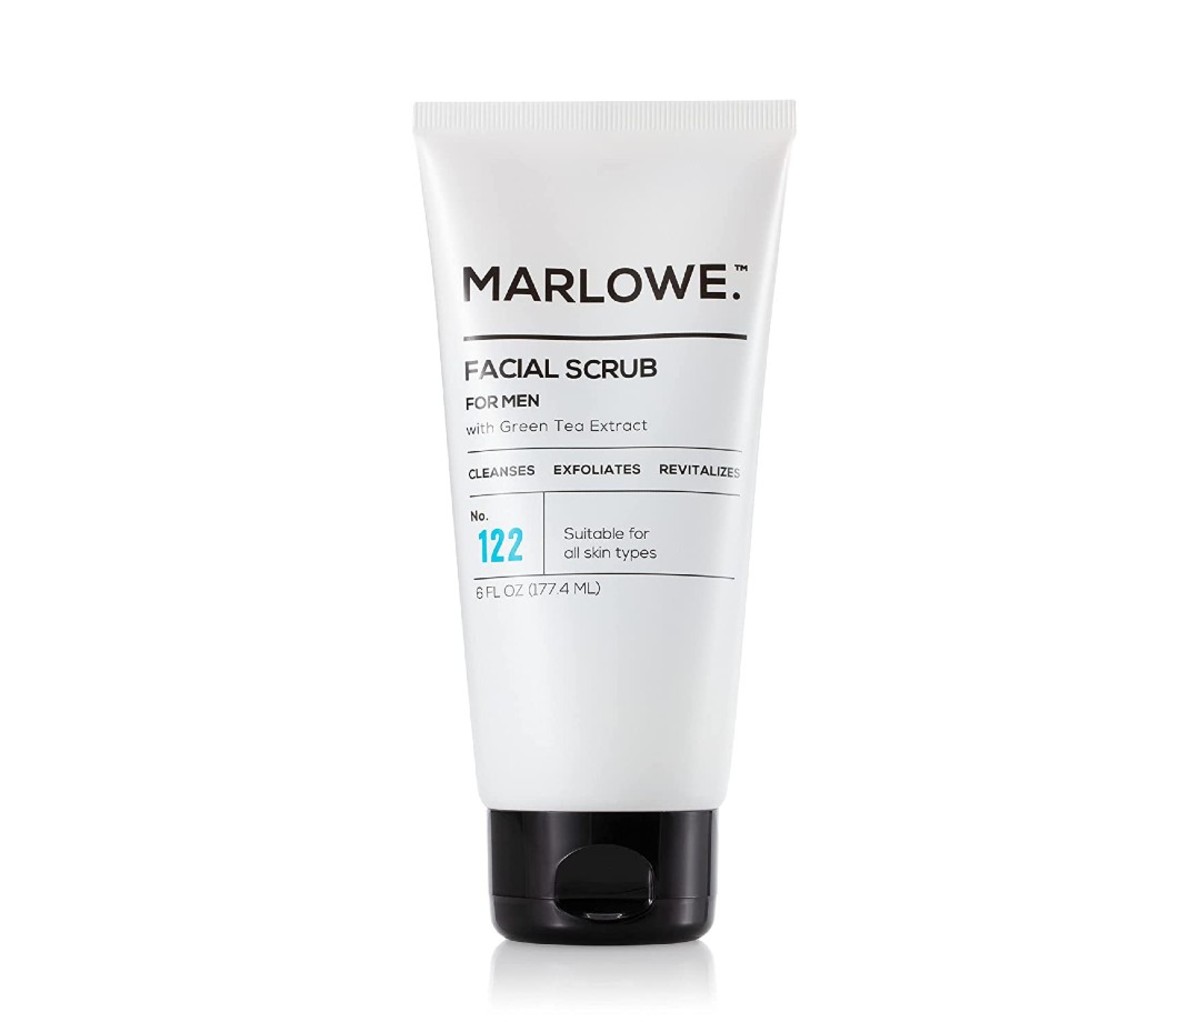 Marlowe NO. 122 Facial Scrub for Men